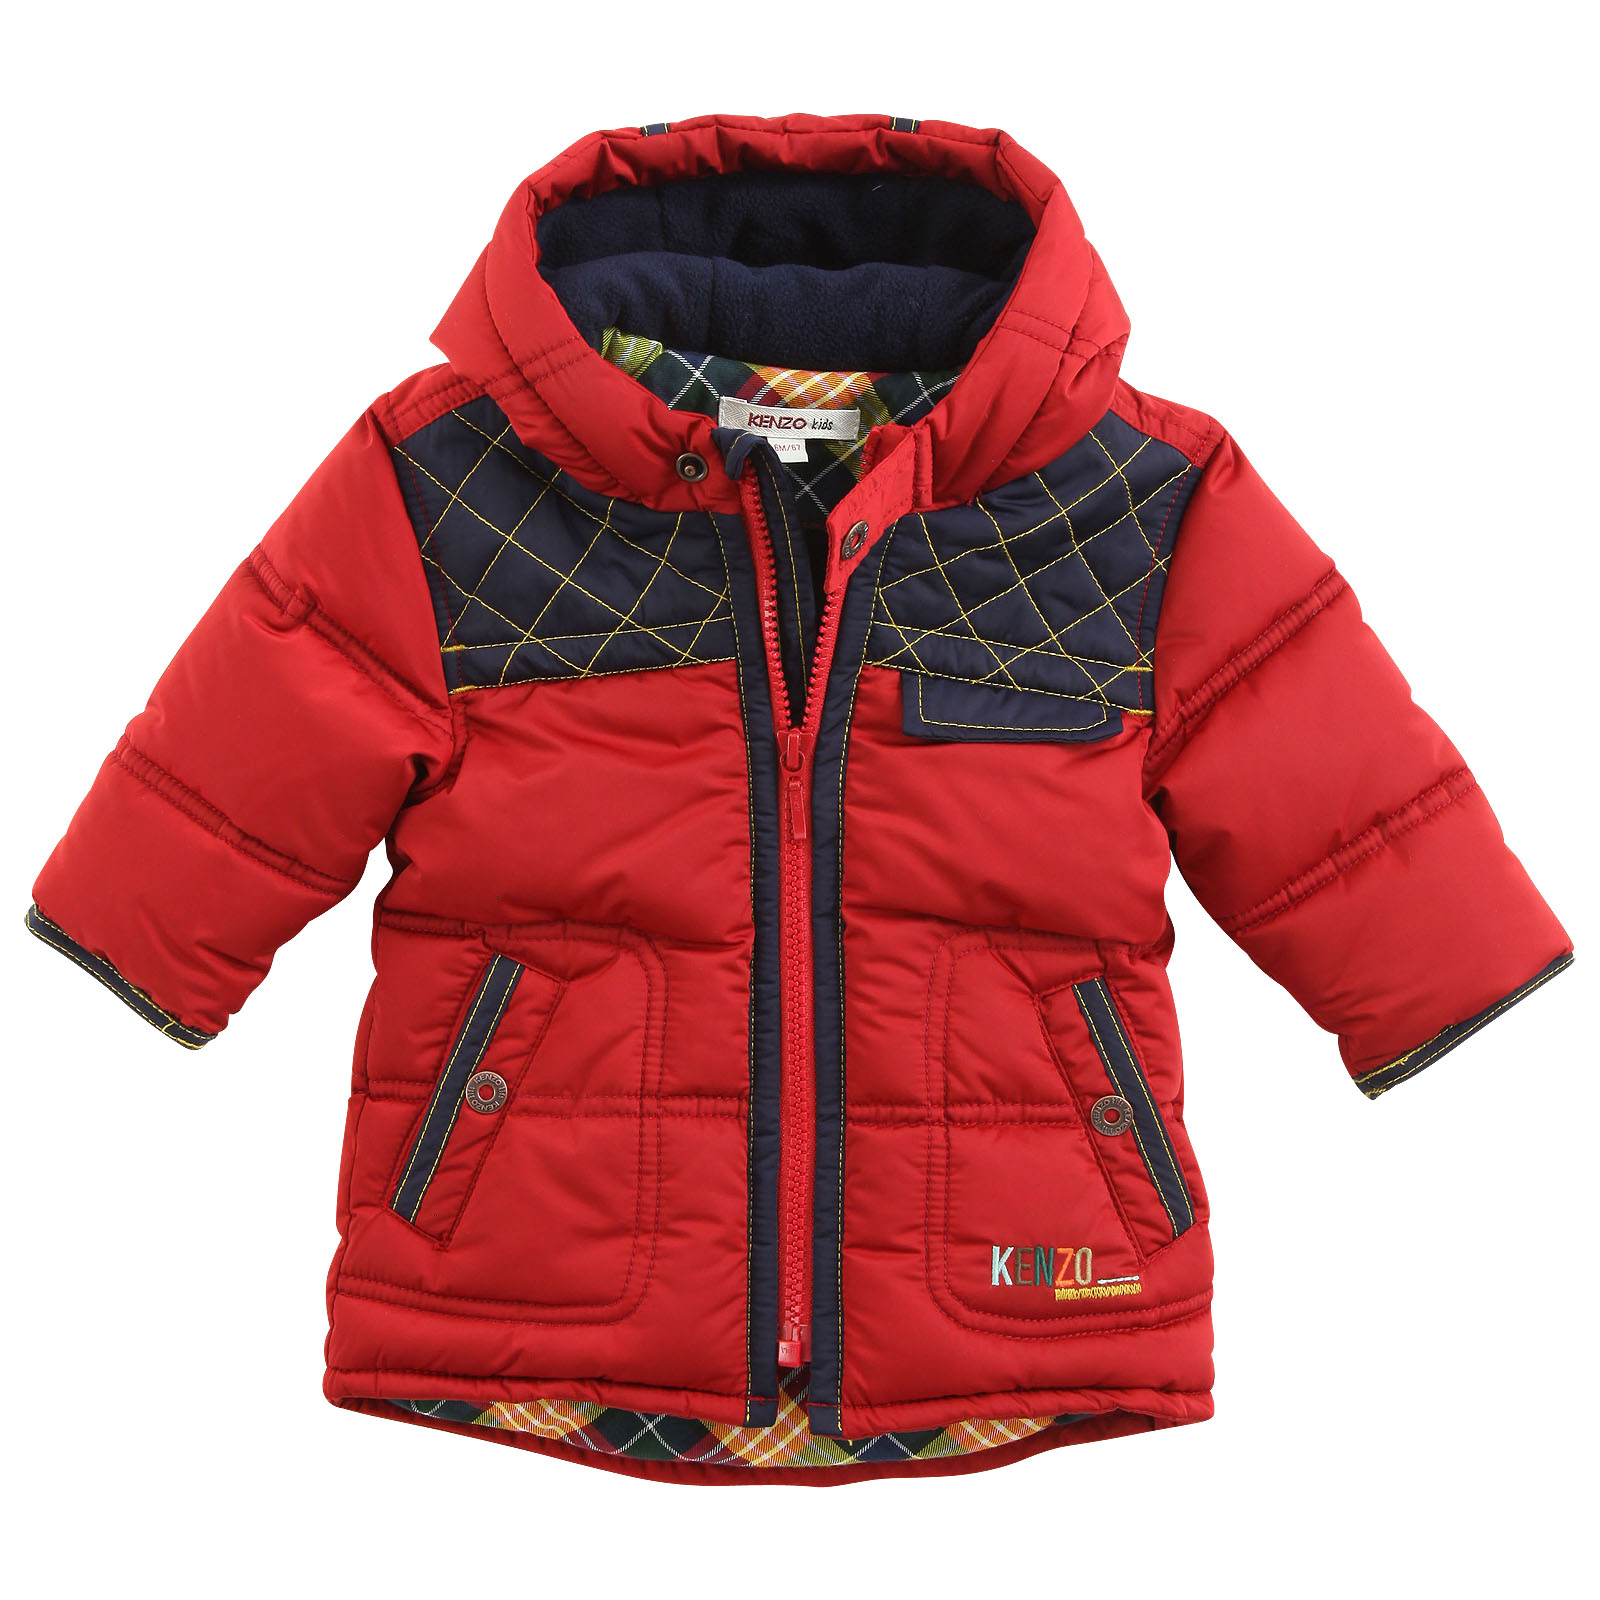 Coat clipart girl jacket. Winter coats free download